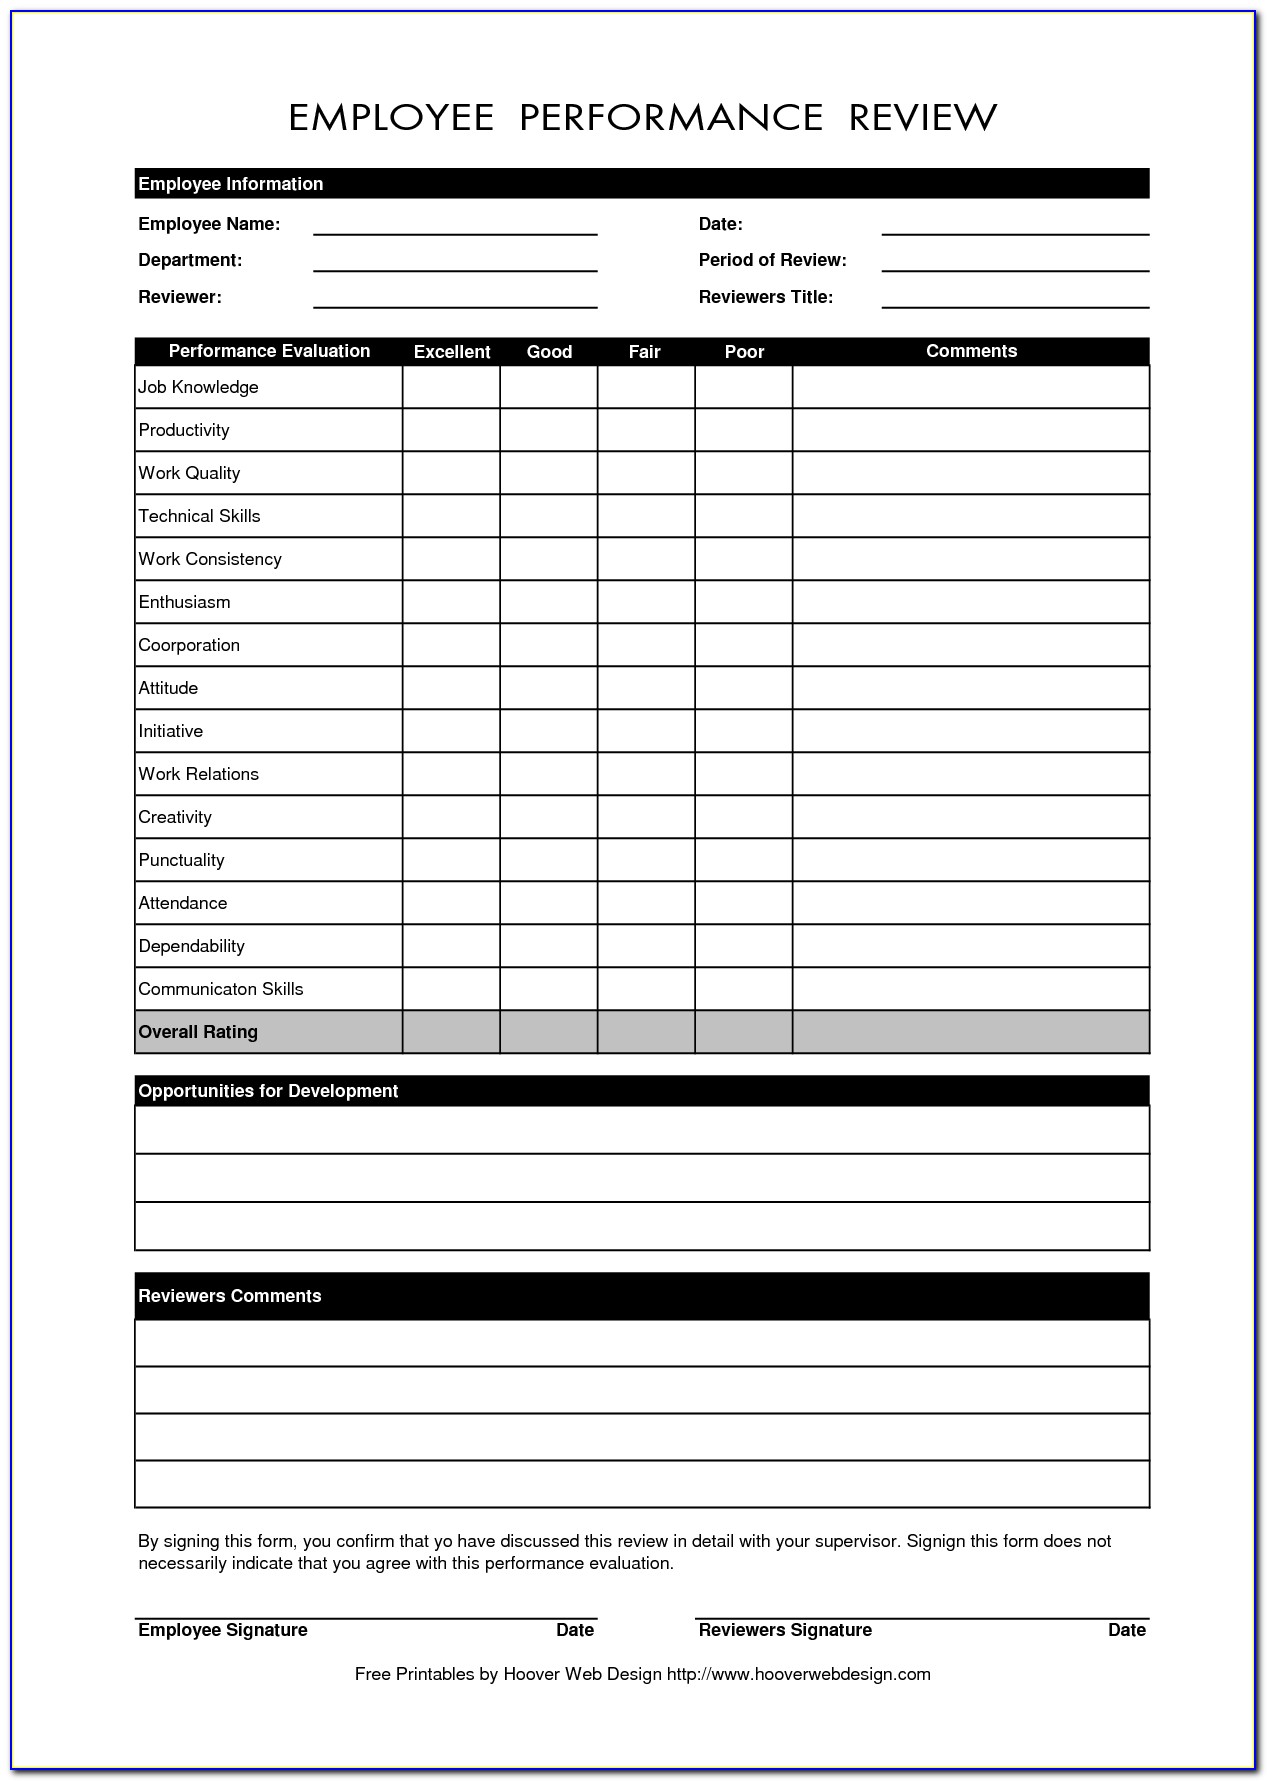 Free Employee Performance Evaluation Form